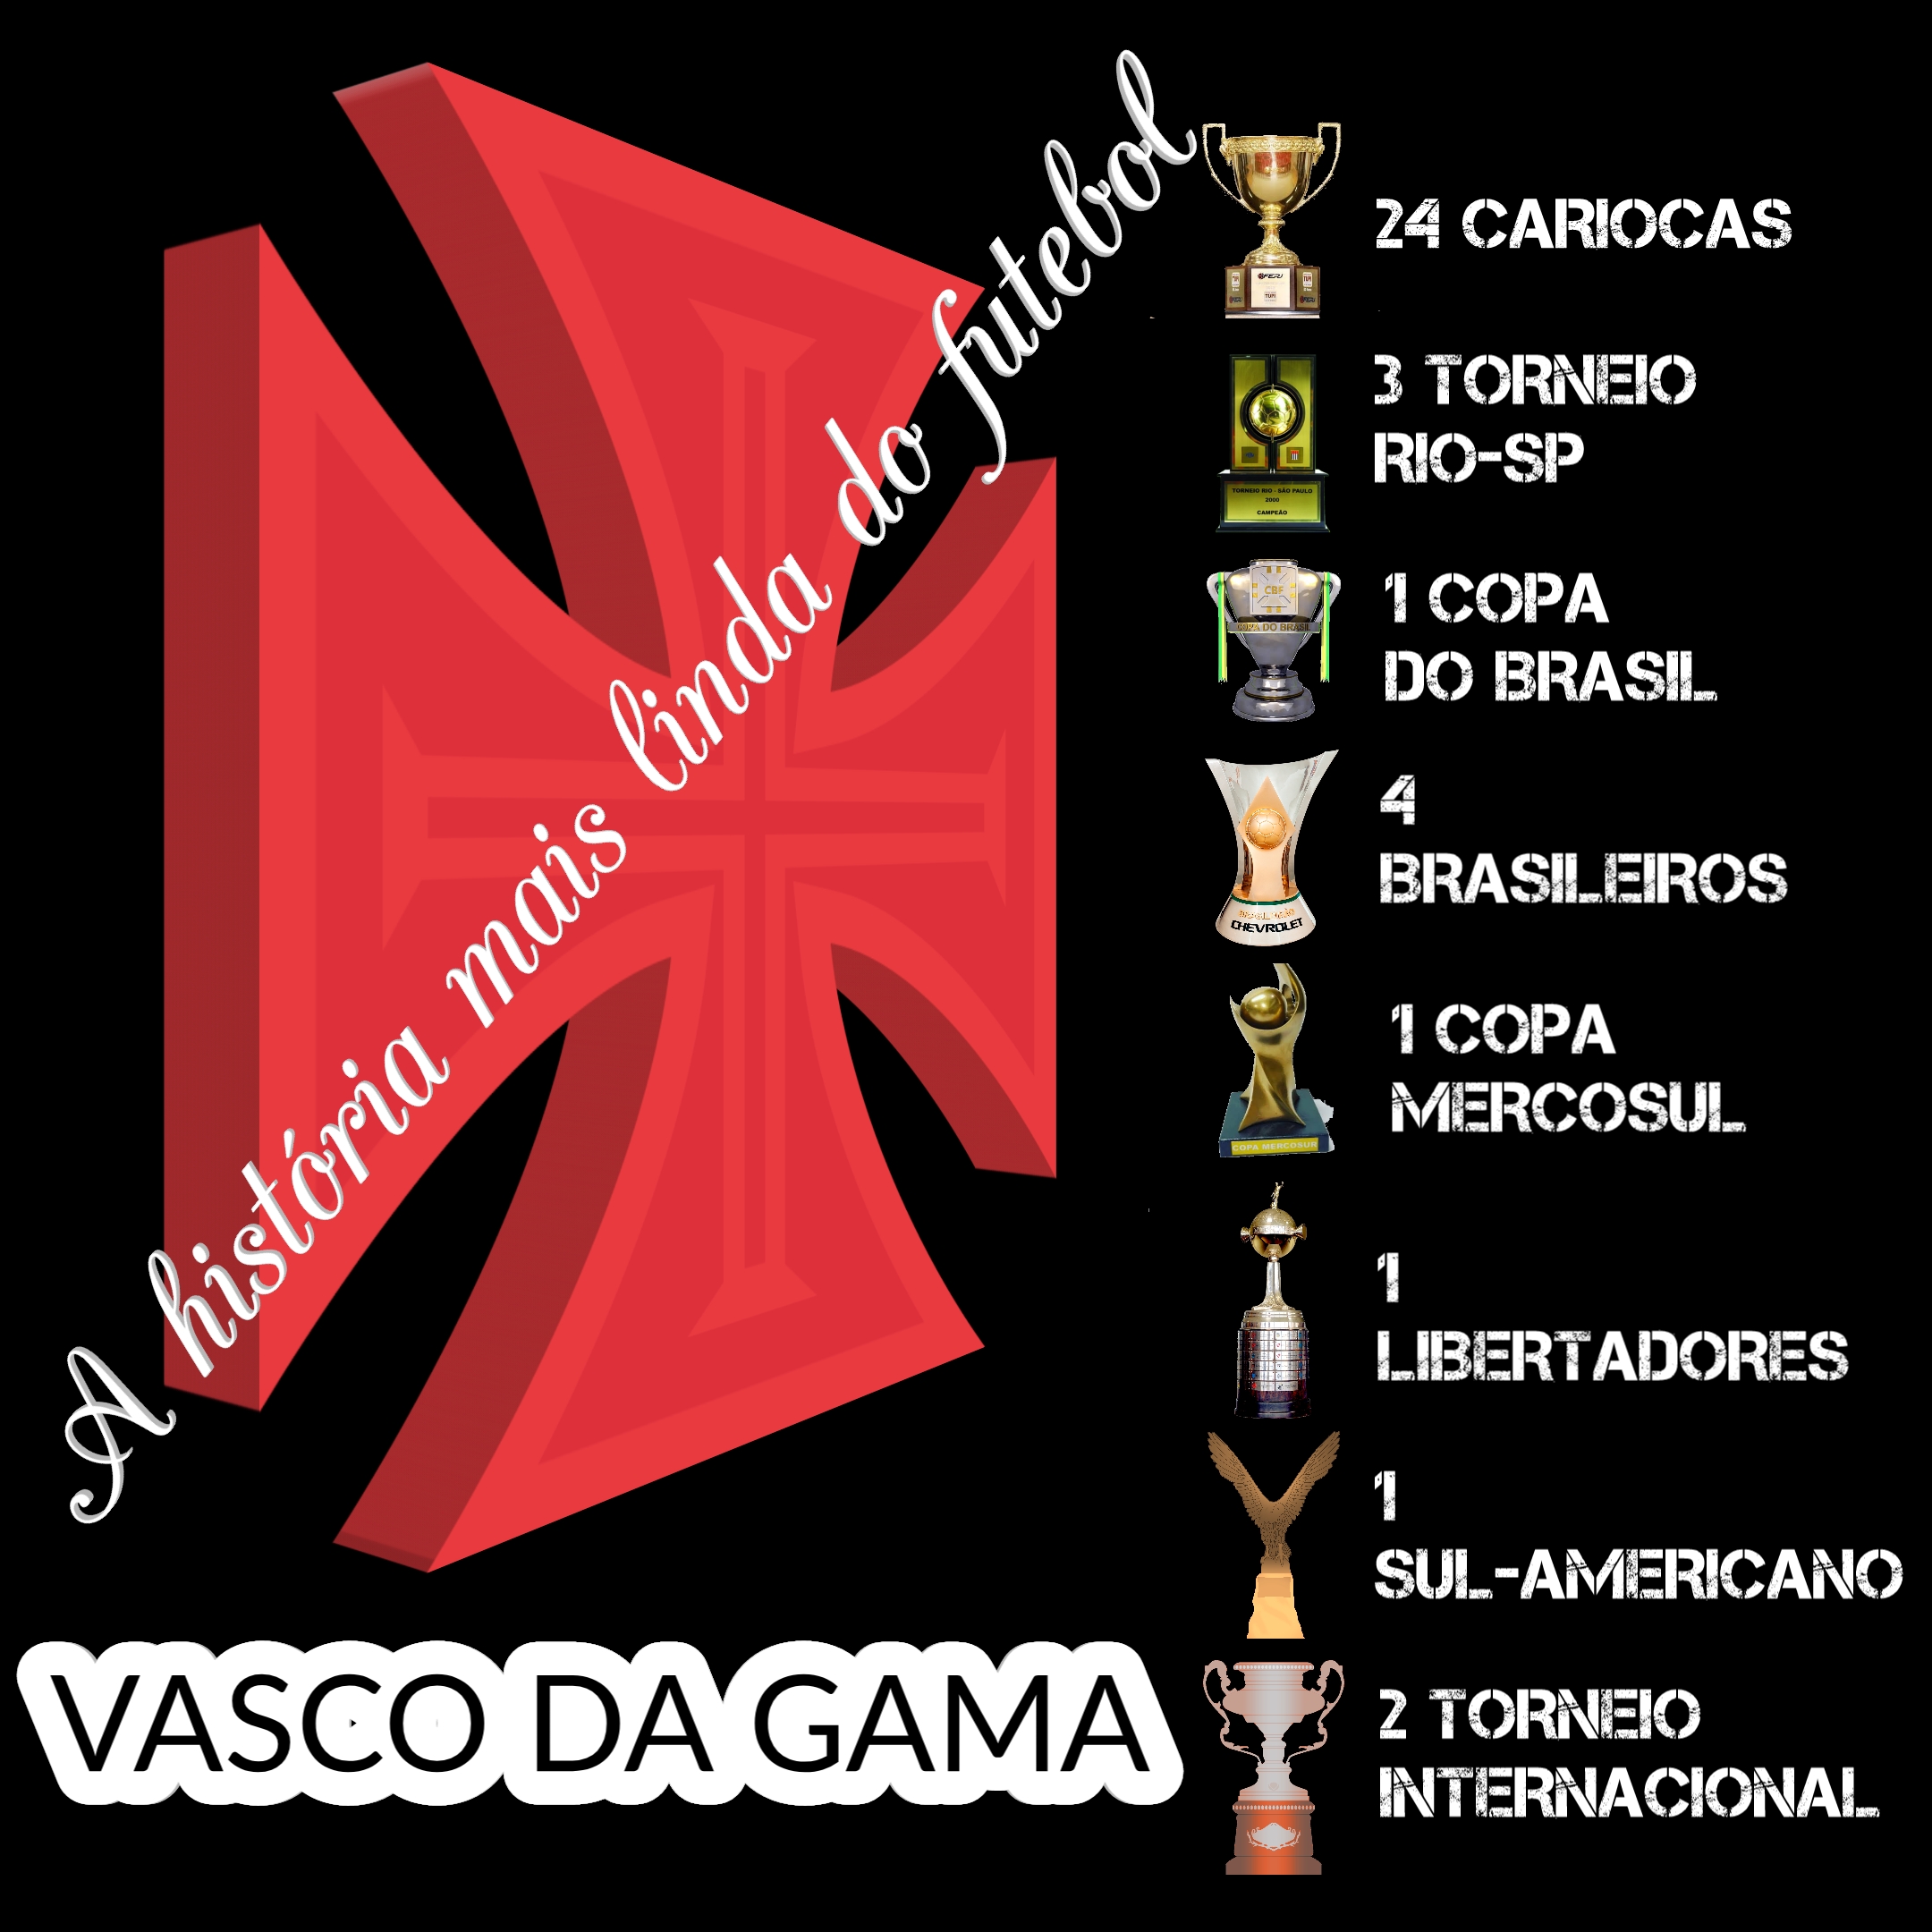 Vasco da gama - Arte Kanvas